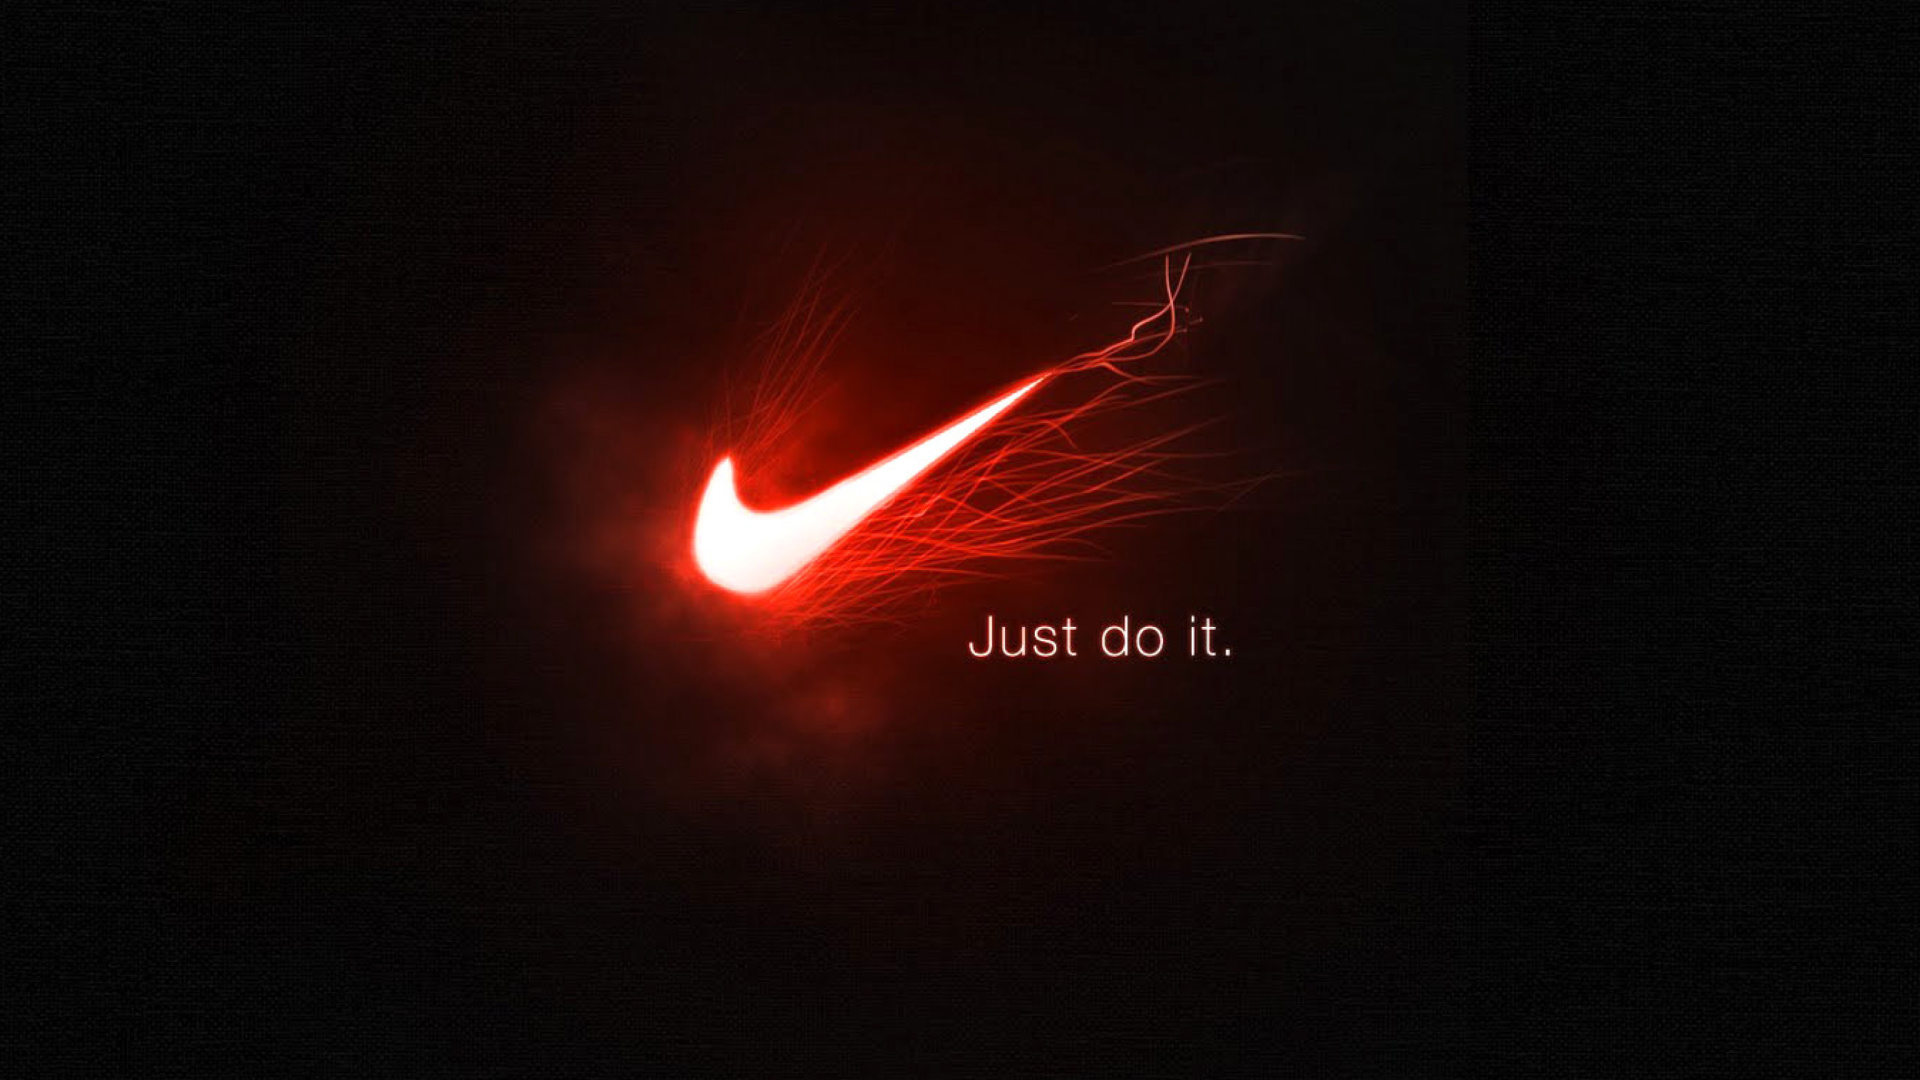 Nike Advertising Slogan Just Do It wallpaper 1920x1080